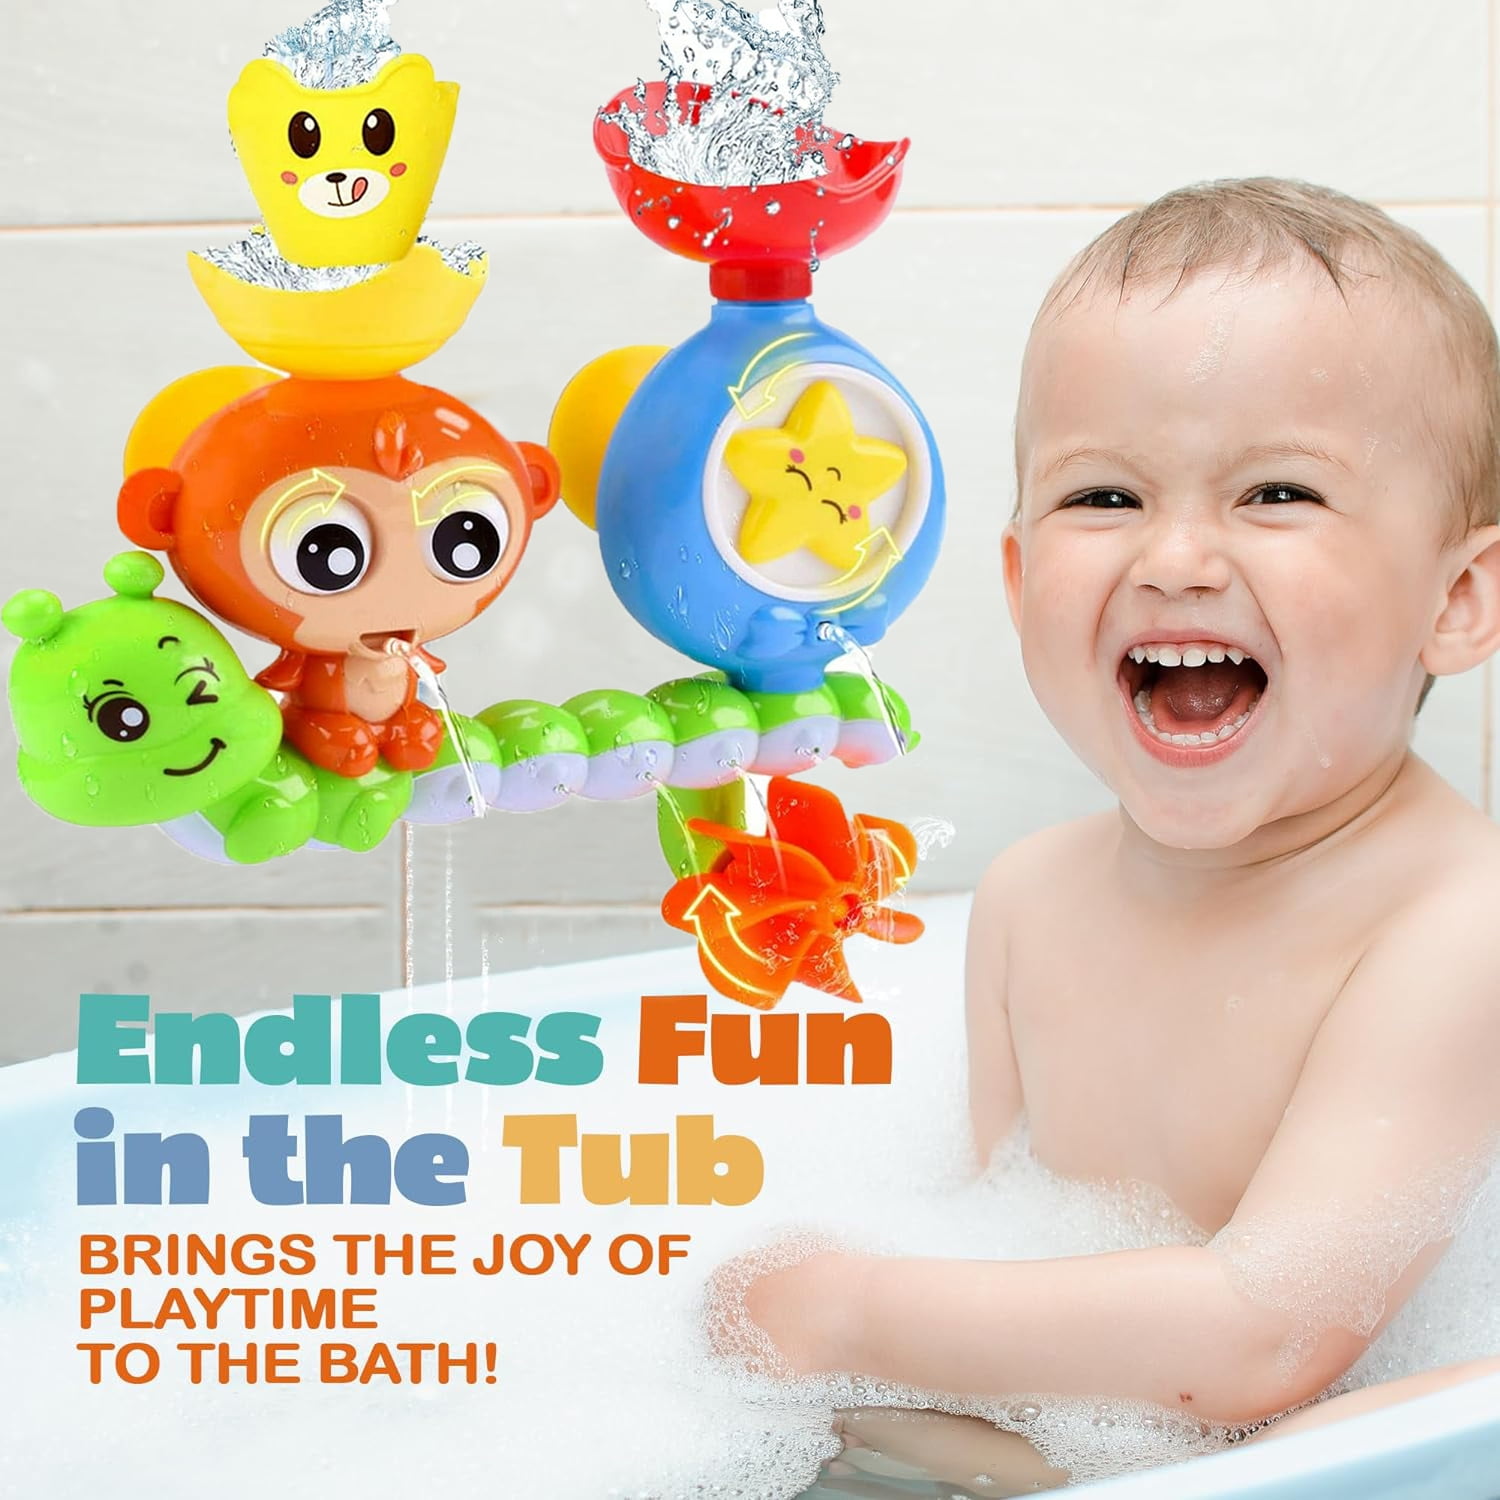 Fun Water Spray Bath Toy For Kids: Umbrella, Water Cup, Squirpara